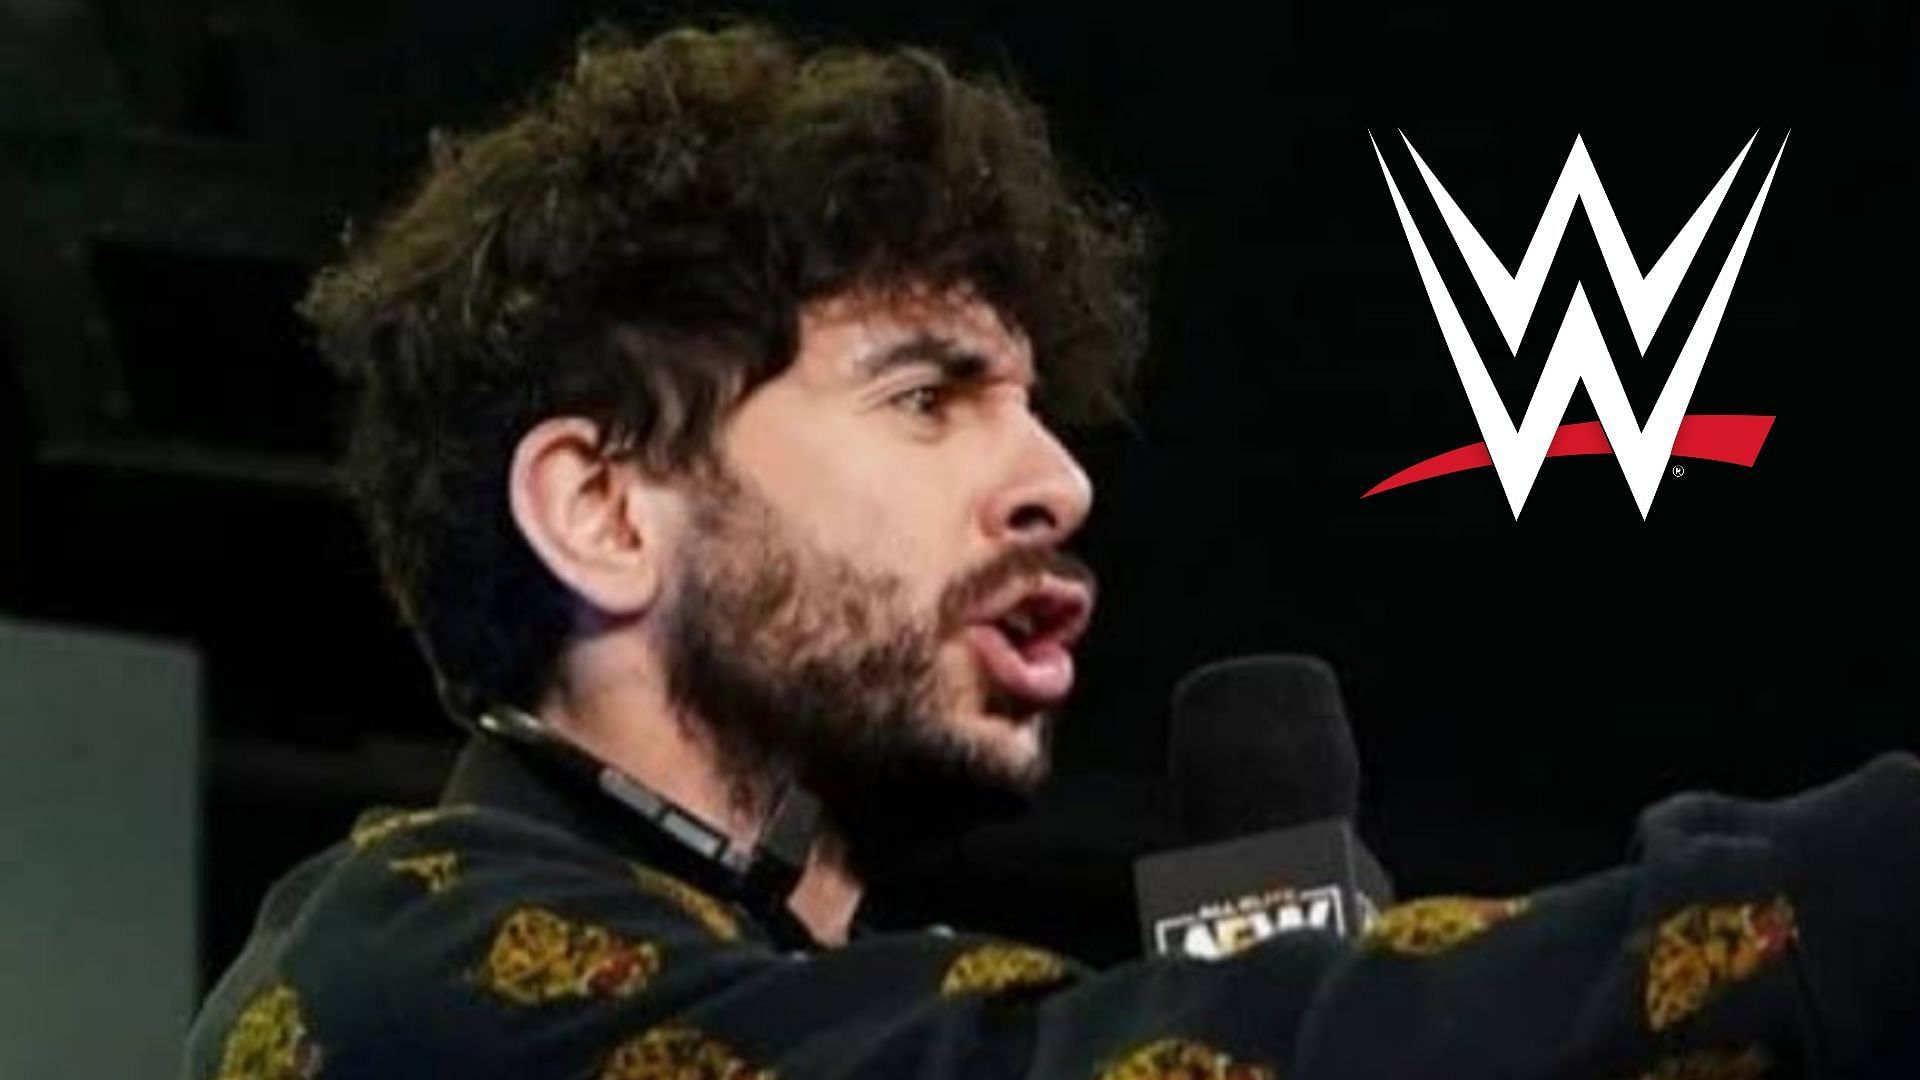 Does WWE really hate Tony Khan and AEW?